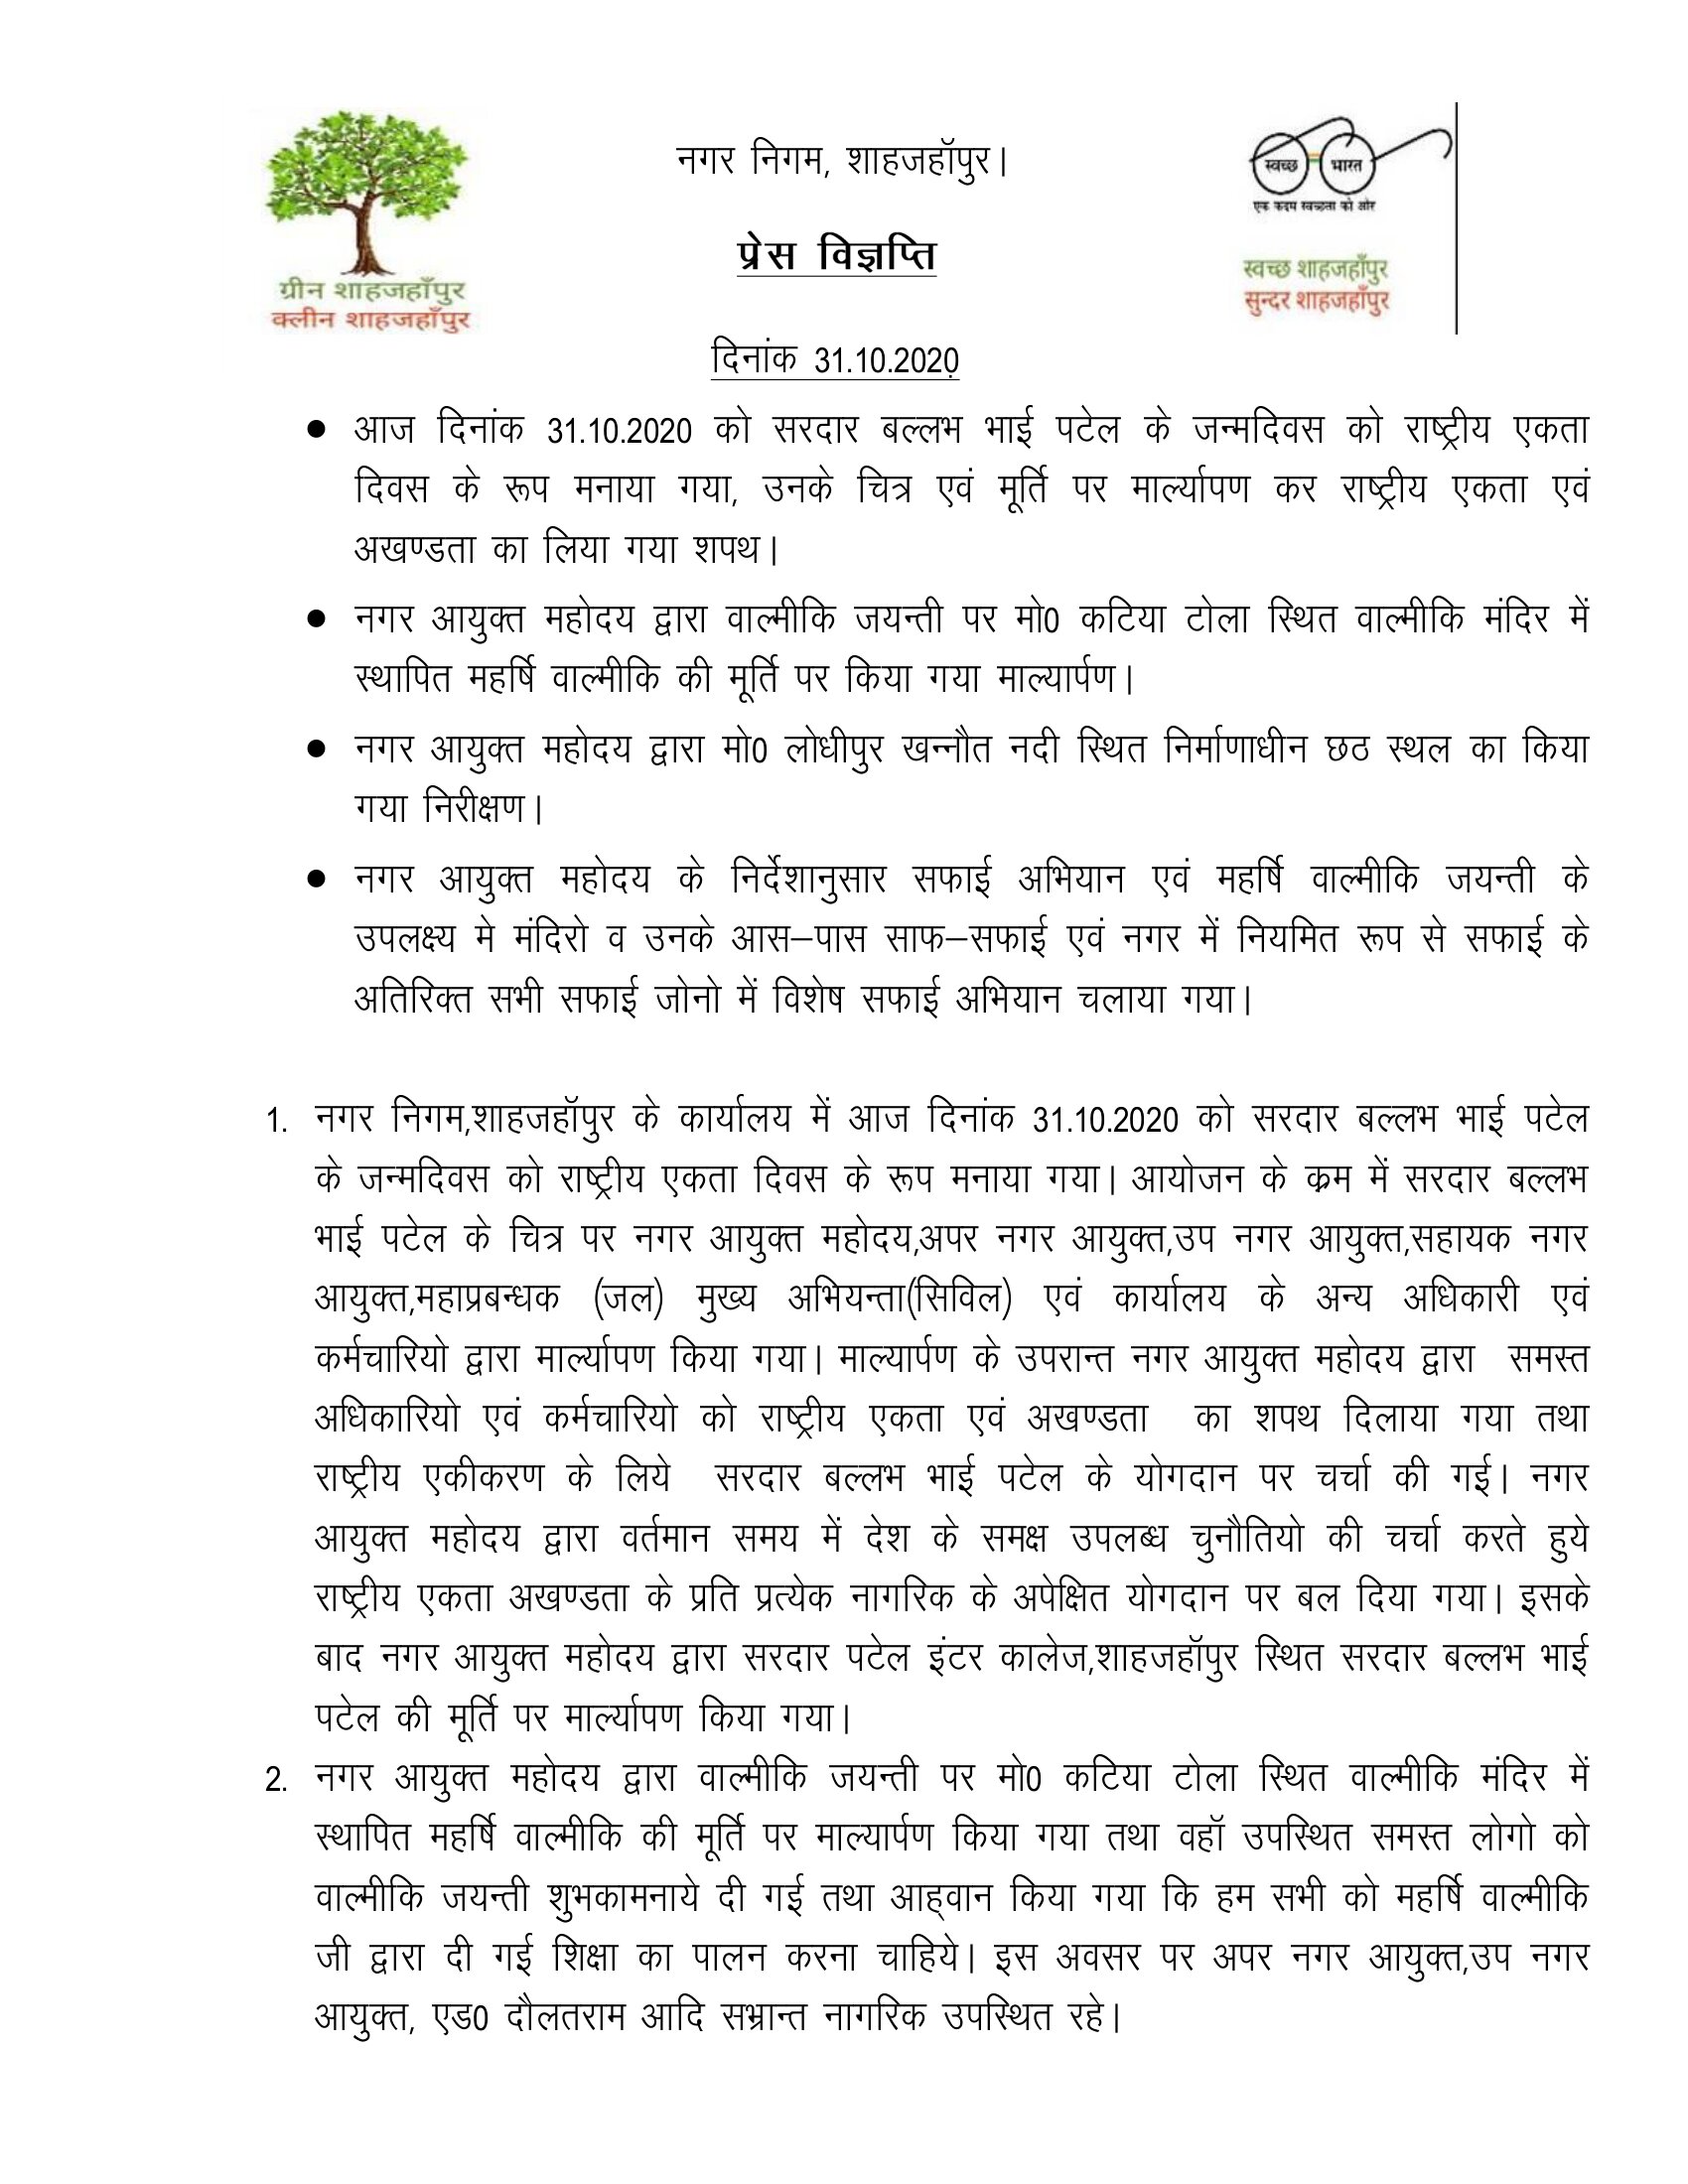 Regarding celebrating the birth day of Sardar Vallabh Bhai Patel on 31.10.2020 as National Unity Day